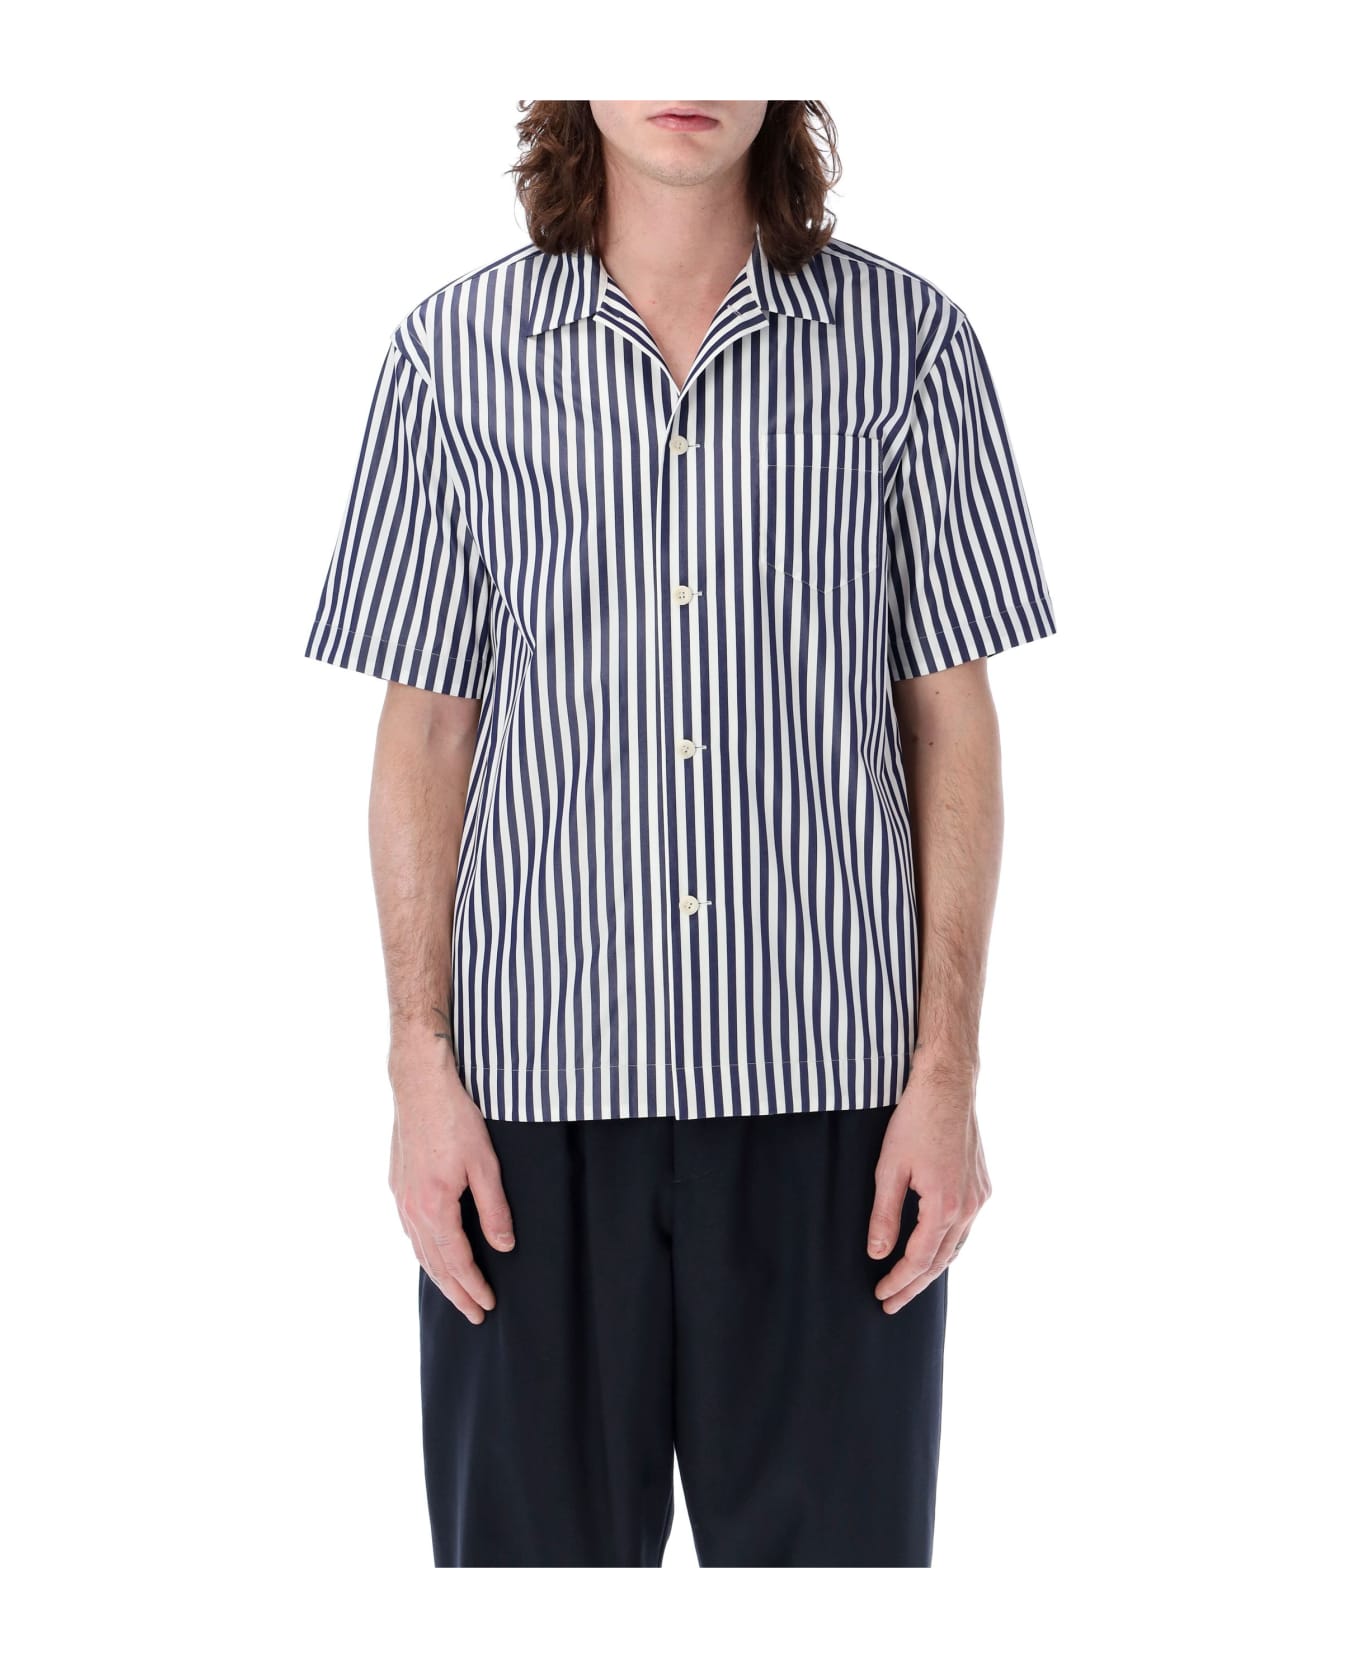 Sacai Striped Shirt - NAVY STRIPE シャツ